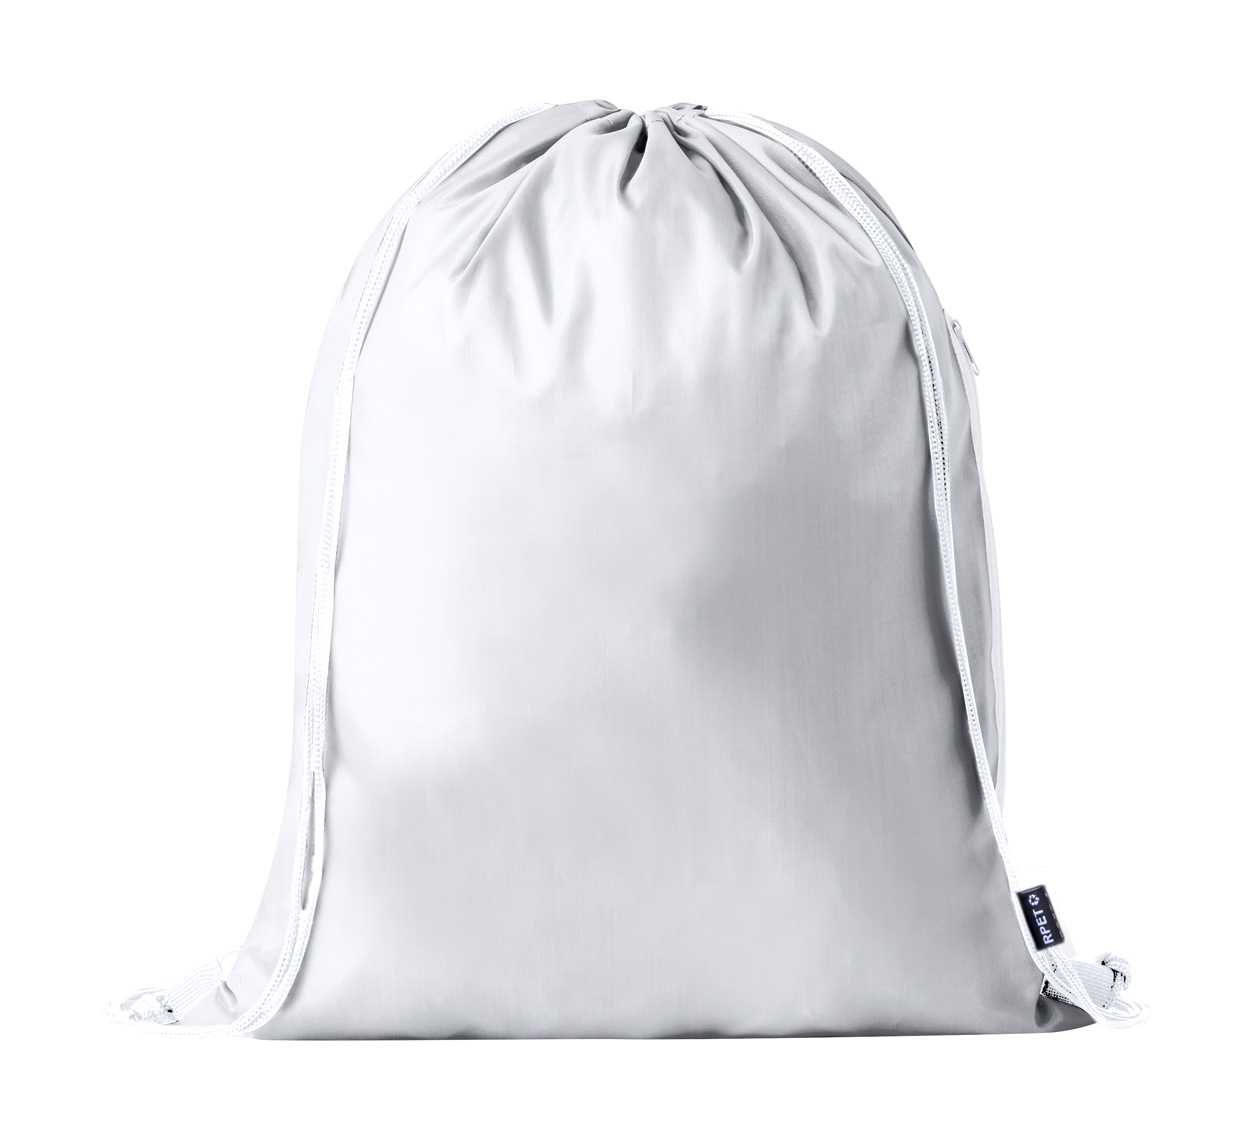 Hildan RPET drawstring bag - white